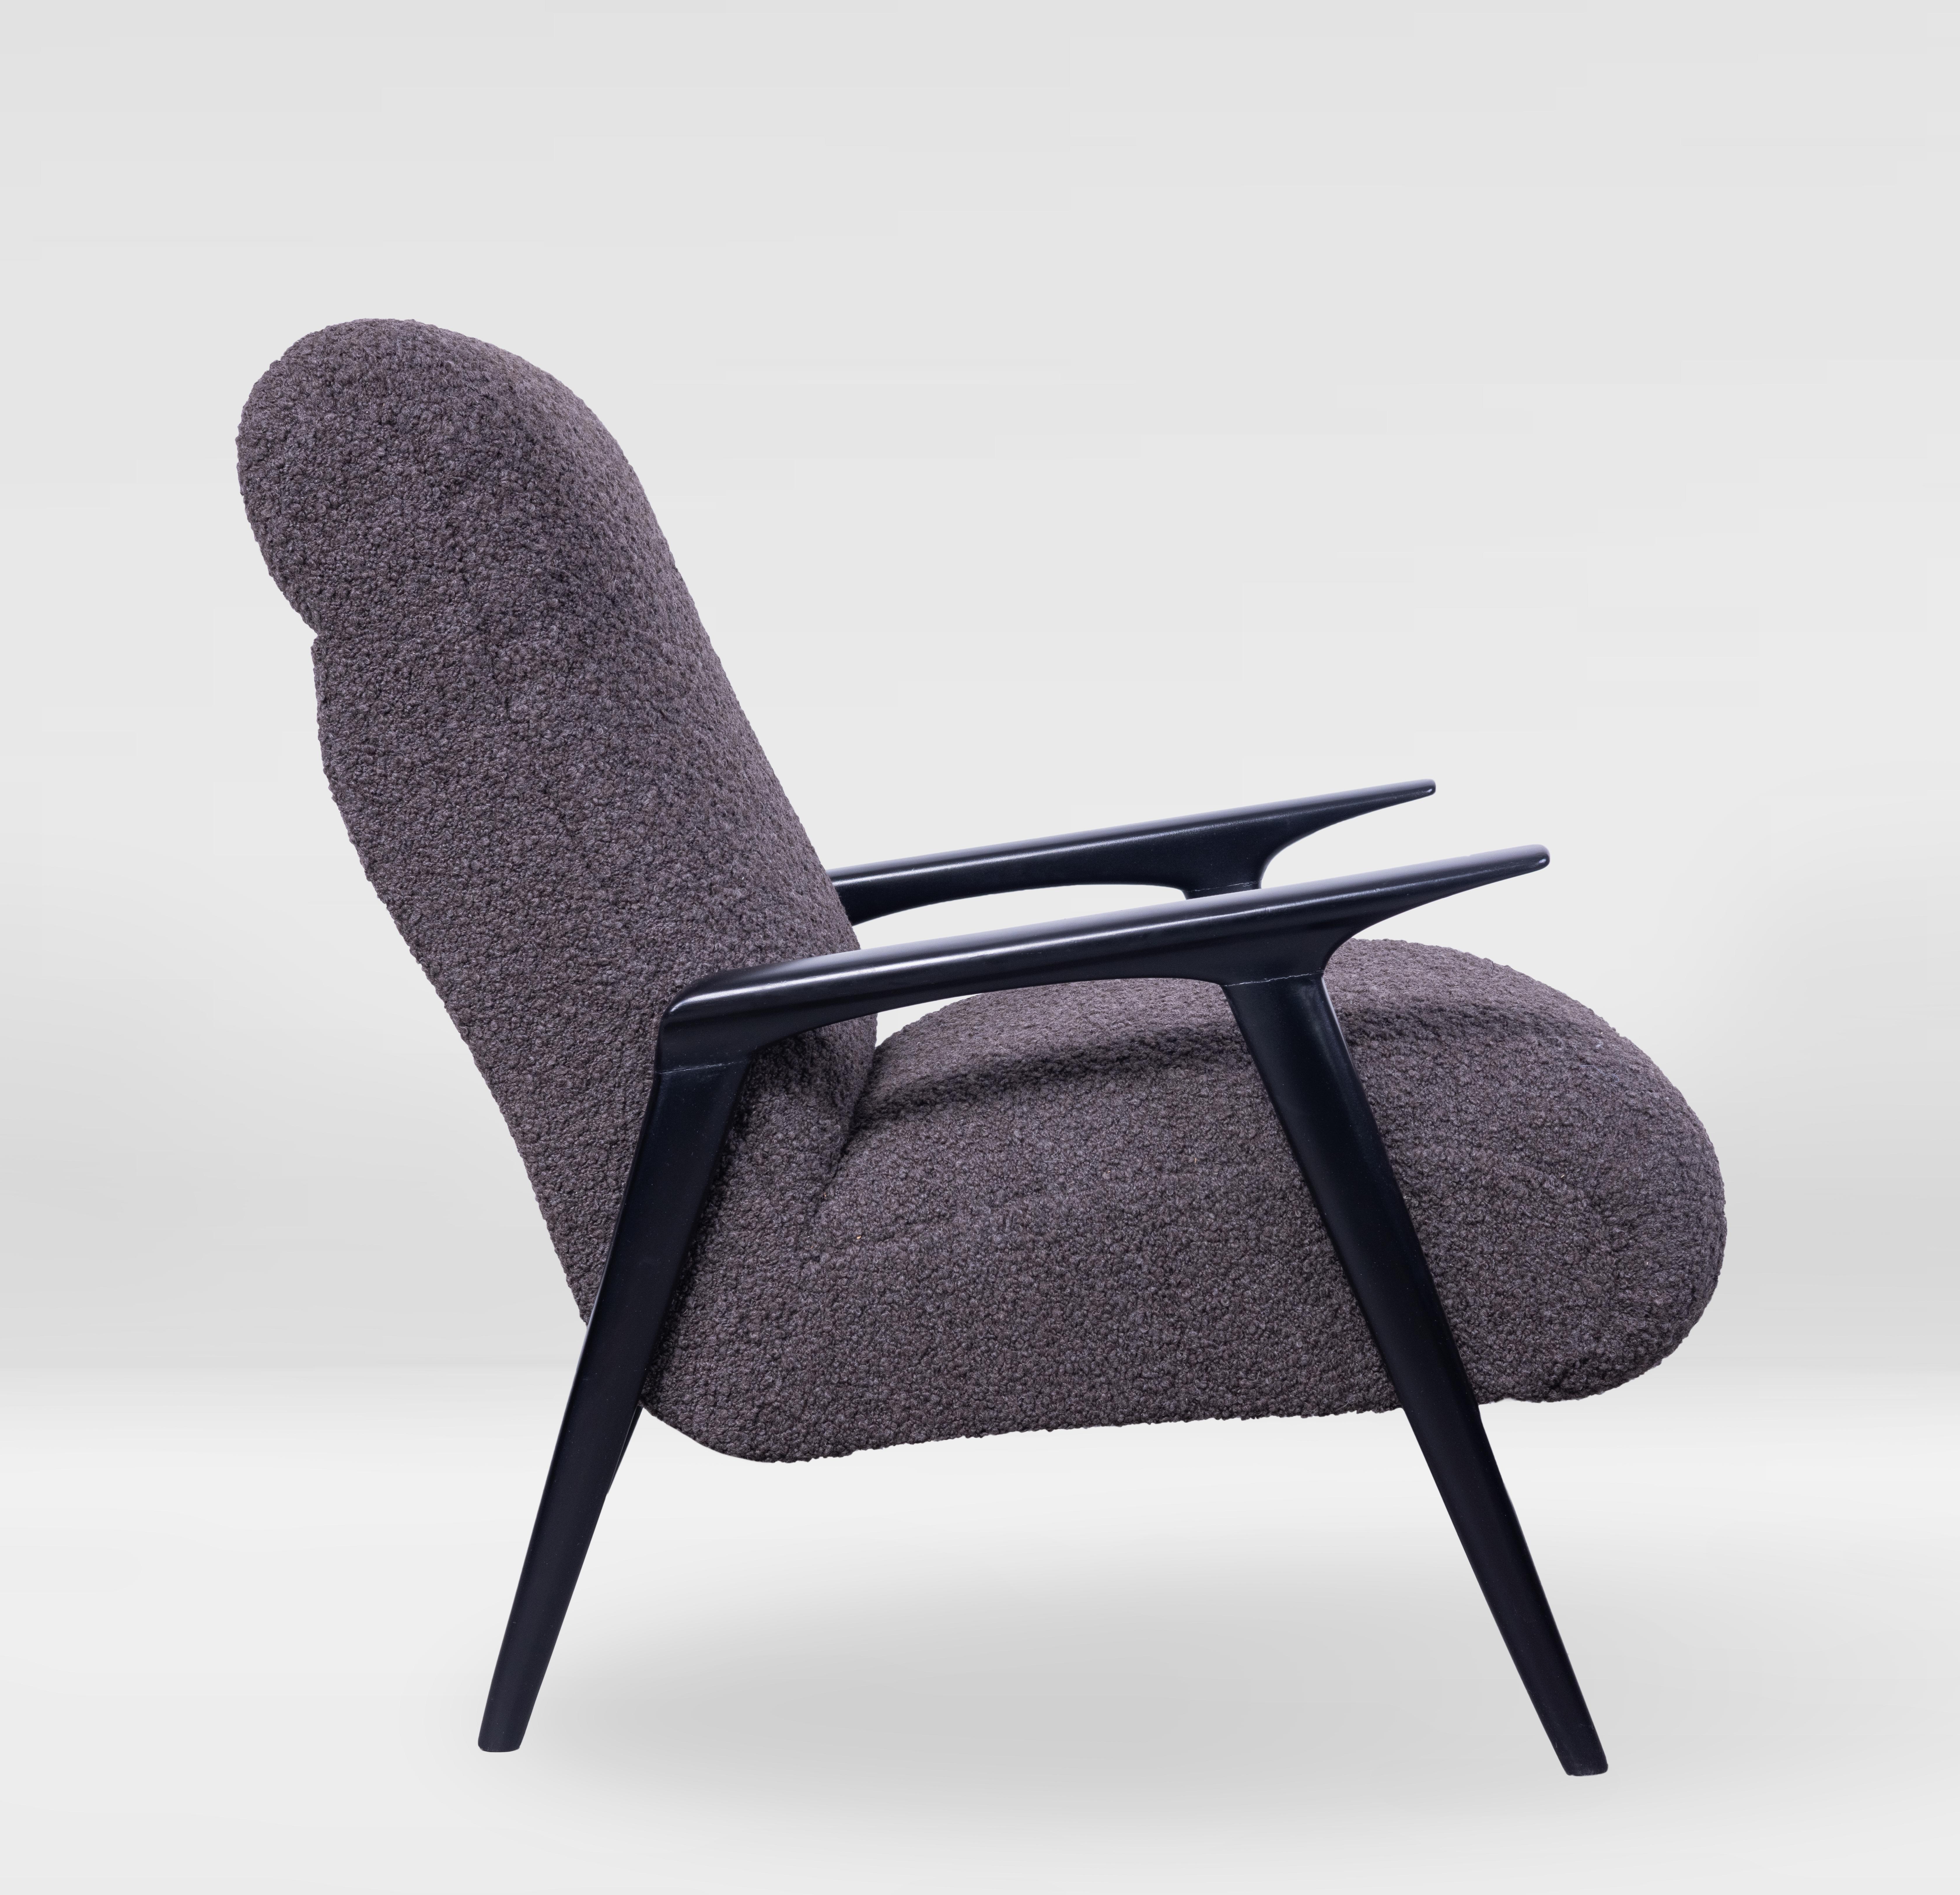 Italian midcentury lounge chair, 1950s, ebonized walnut wood, reupholstered in Colefax & Fowler alpaca boucle’.